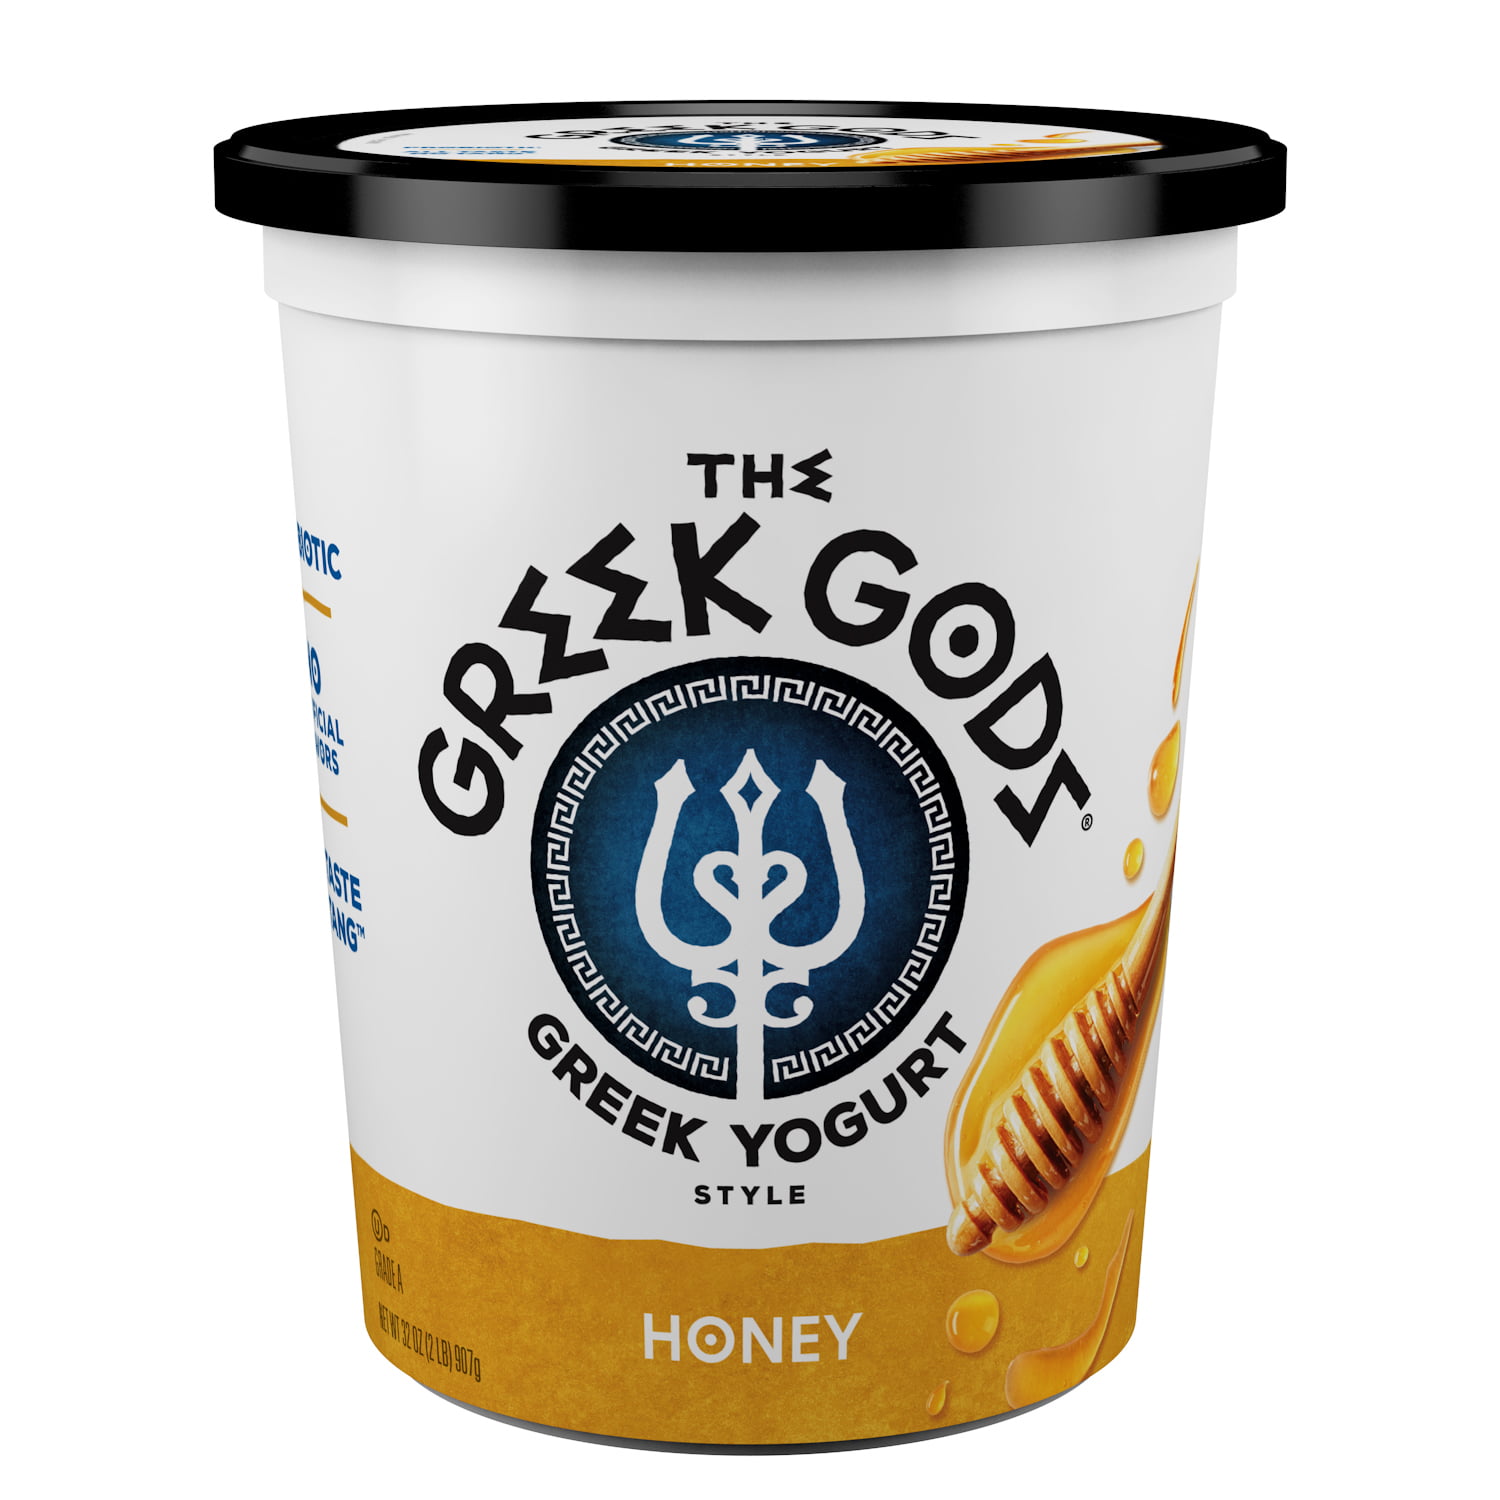 The Greek Gods Honey Greek Style Yogurt, 32 oz Tub